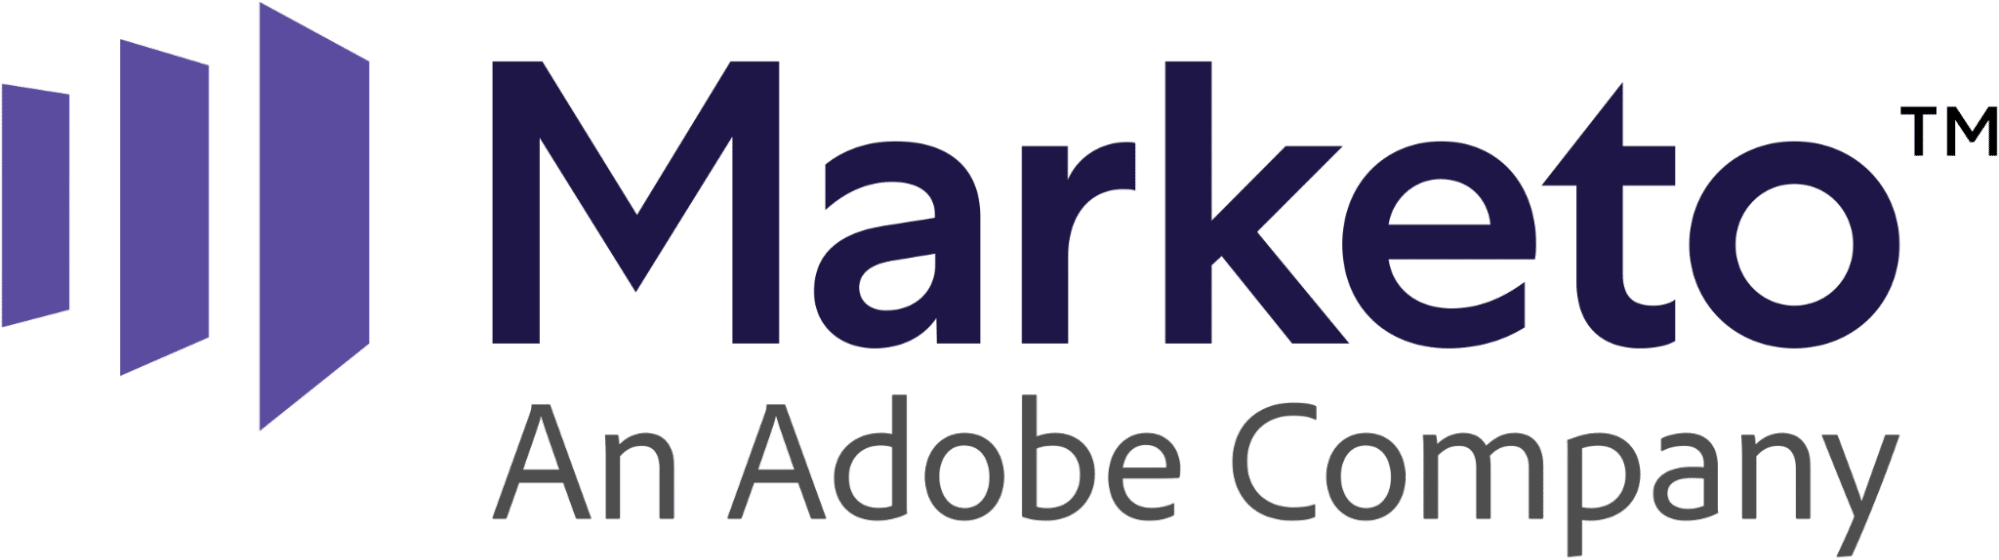 Adobe Marketo